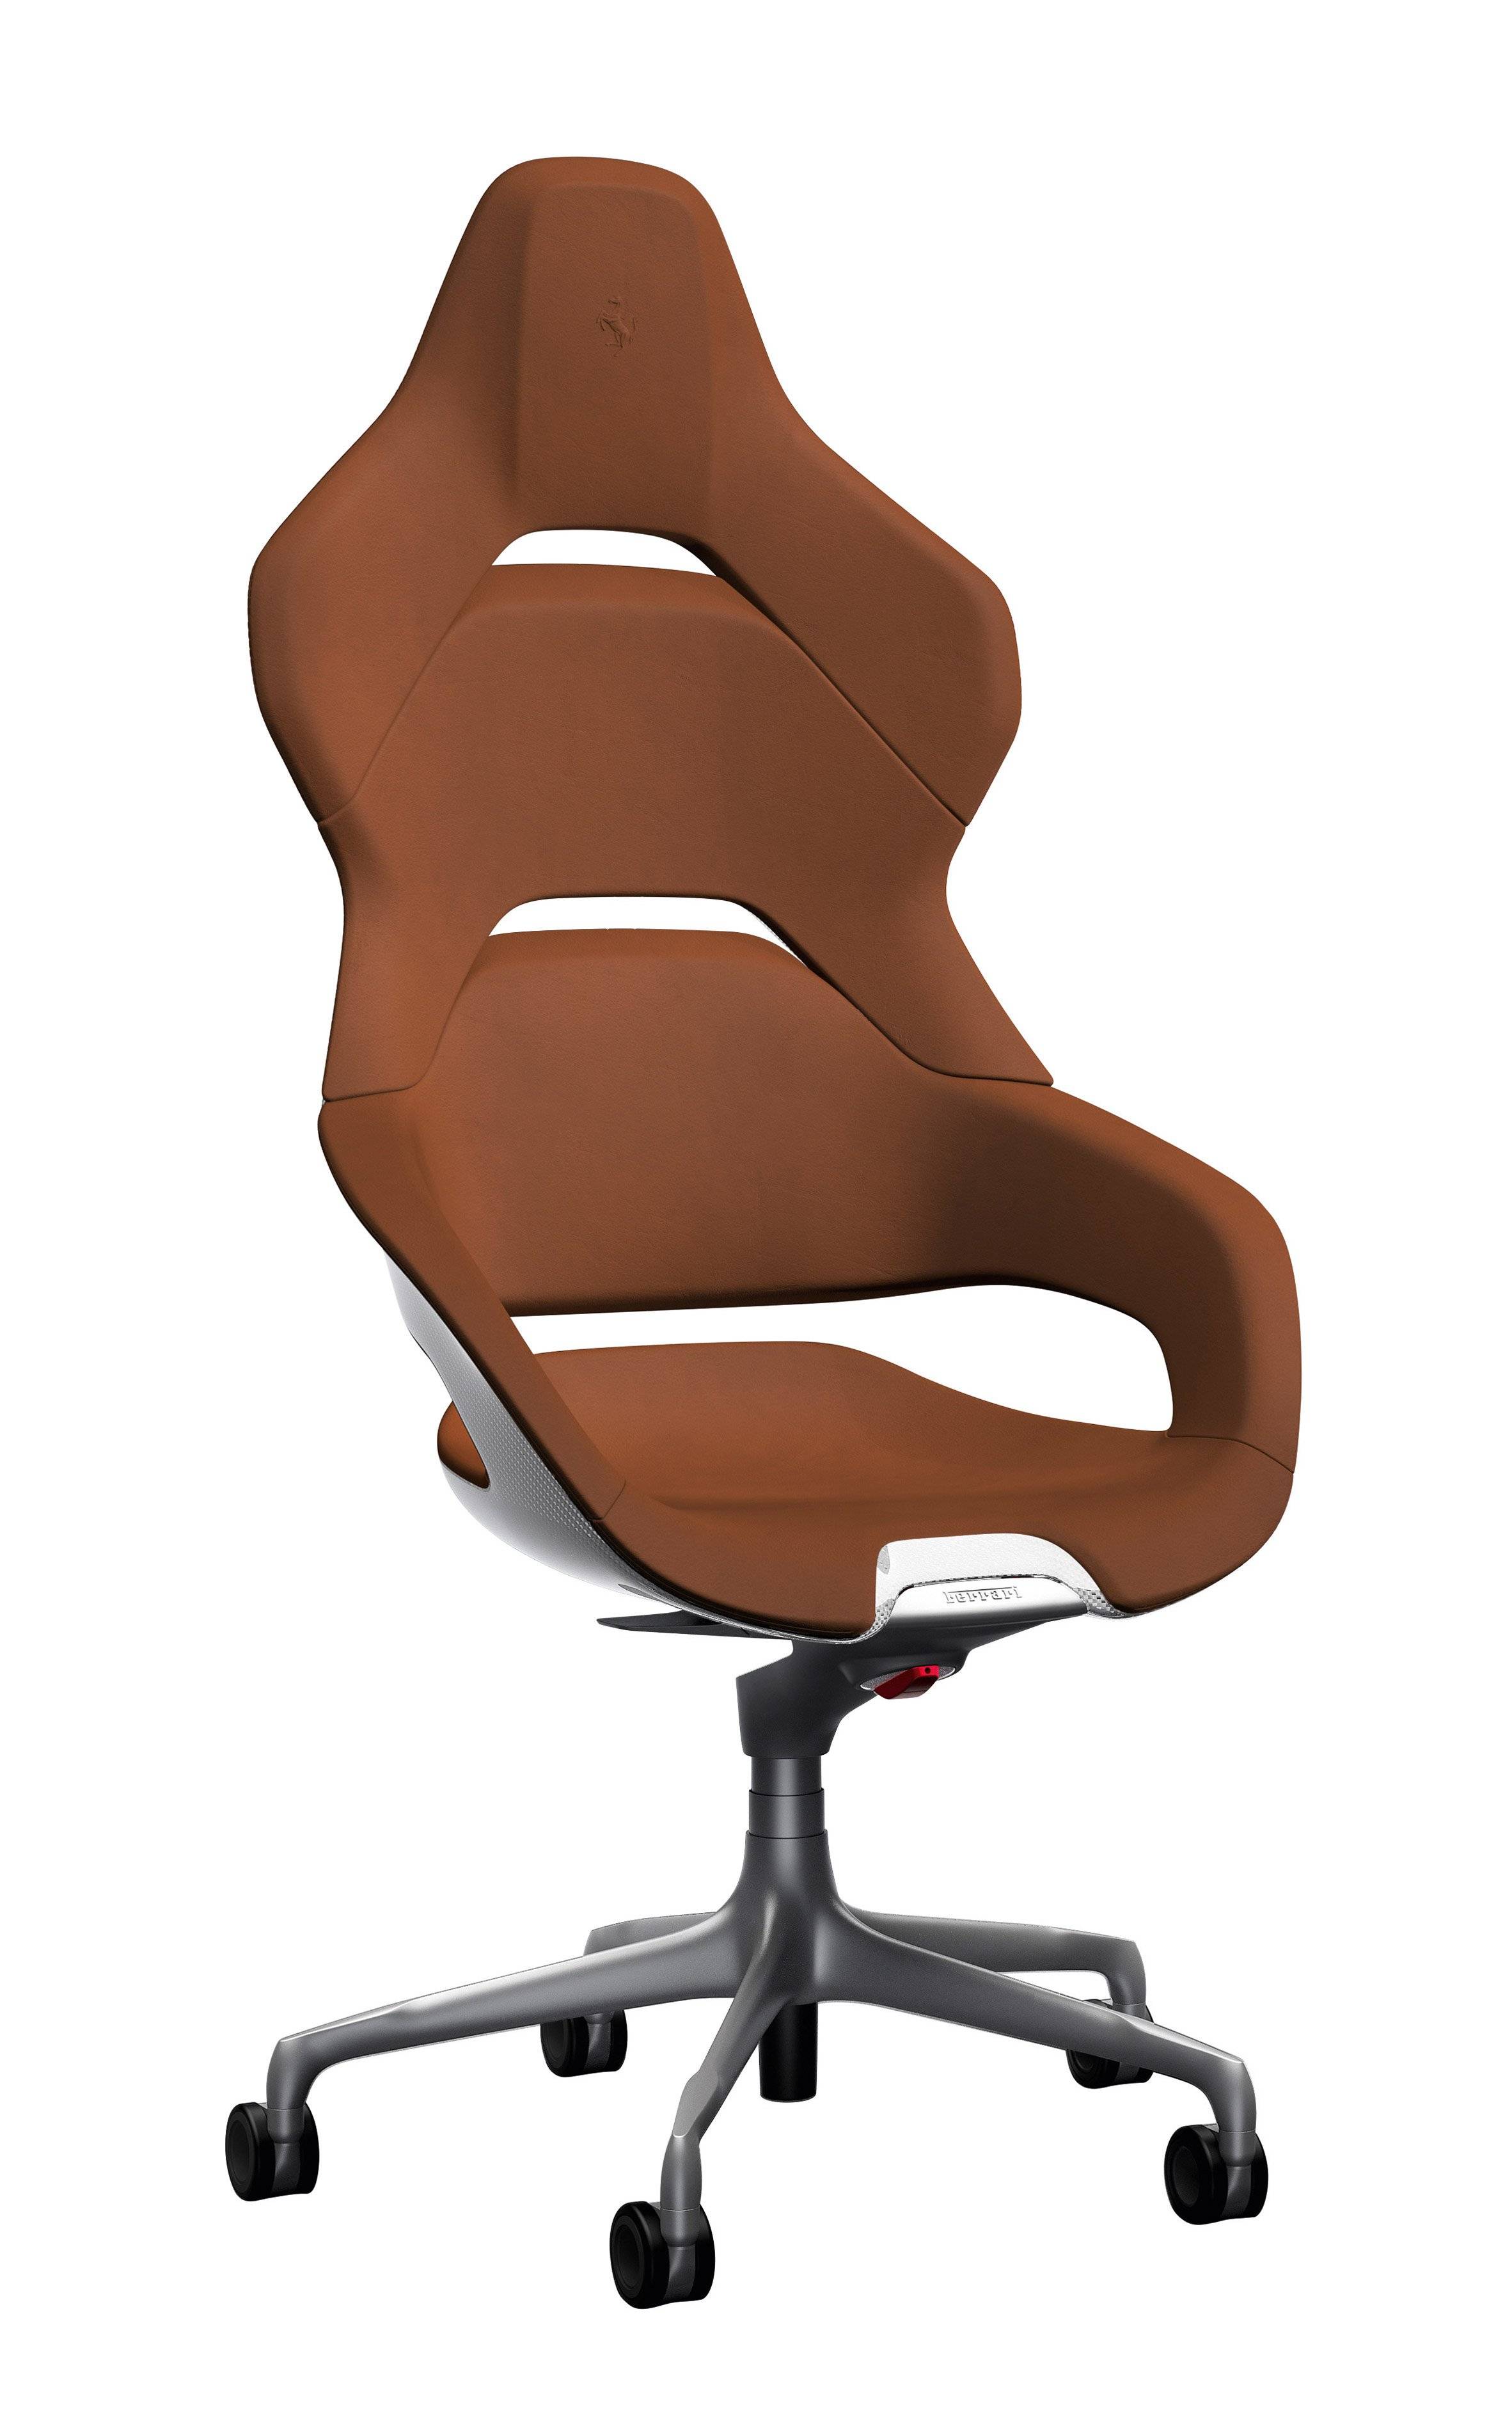 ferrari-poltrona-frau-chair-milan-design-week-furniture_dezeen_2364_col_16